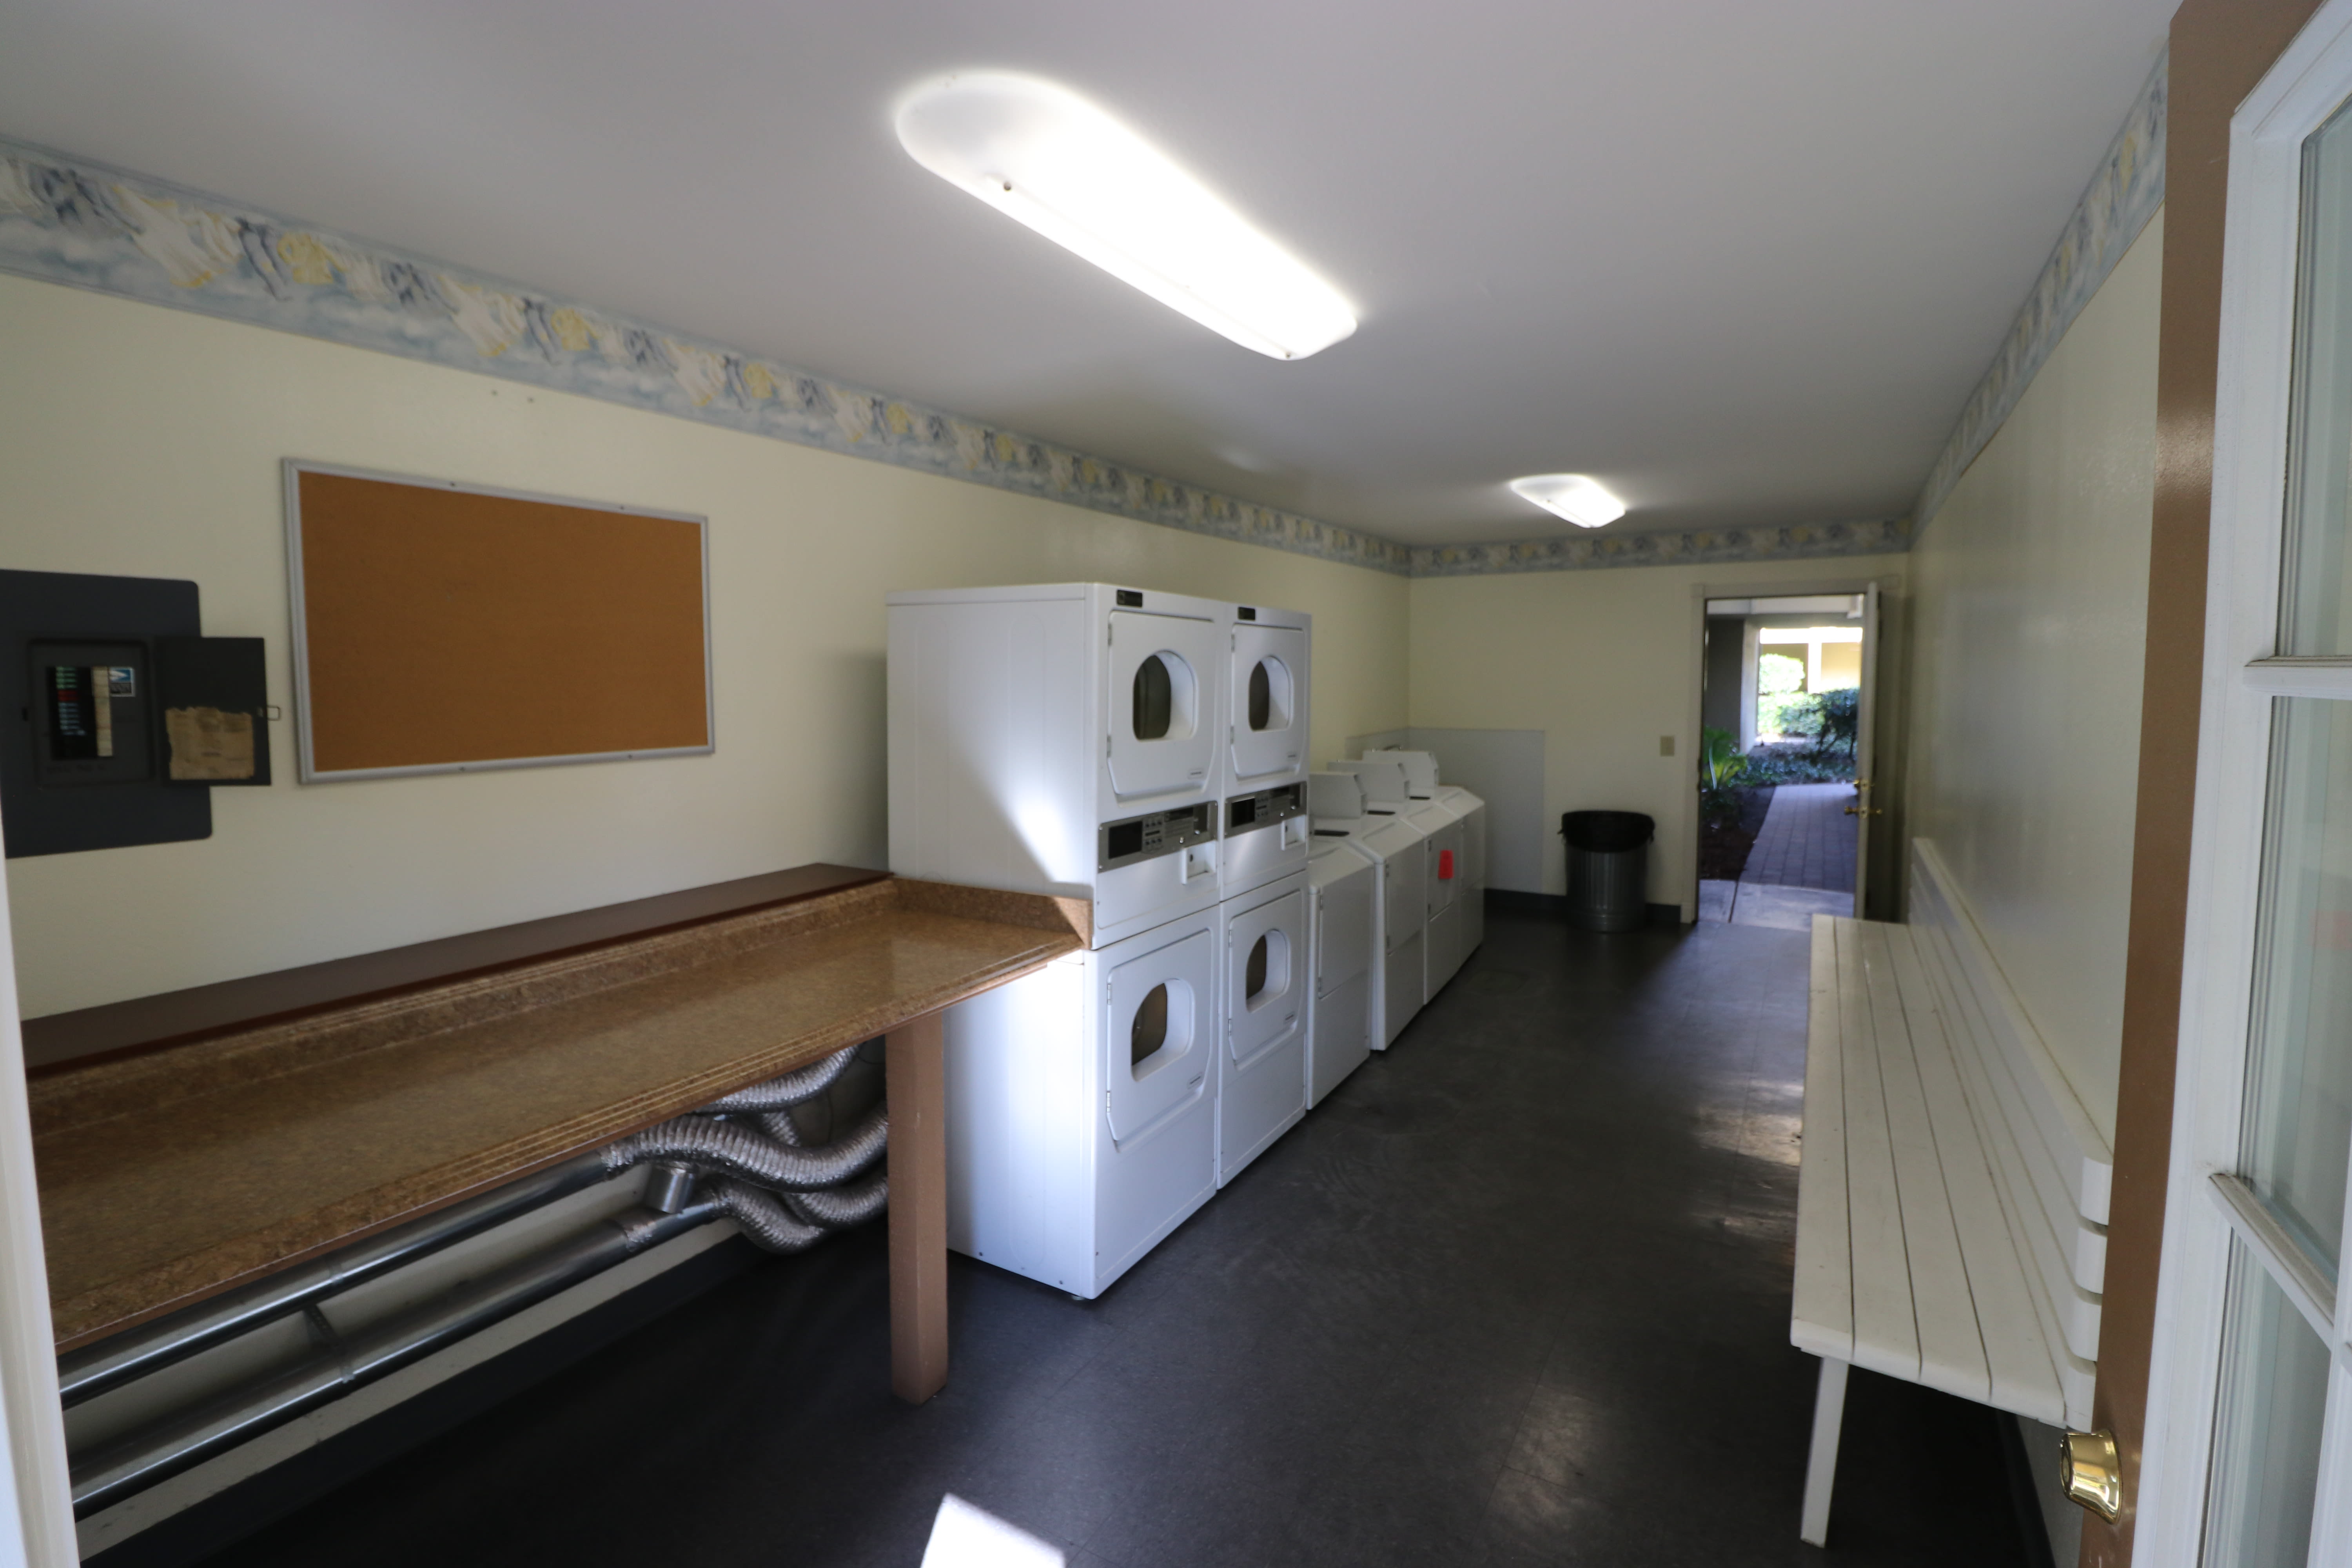 Onsite laundry facility at Bayfair Apartment Homes in San Lorenzo, California